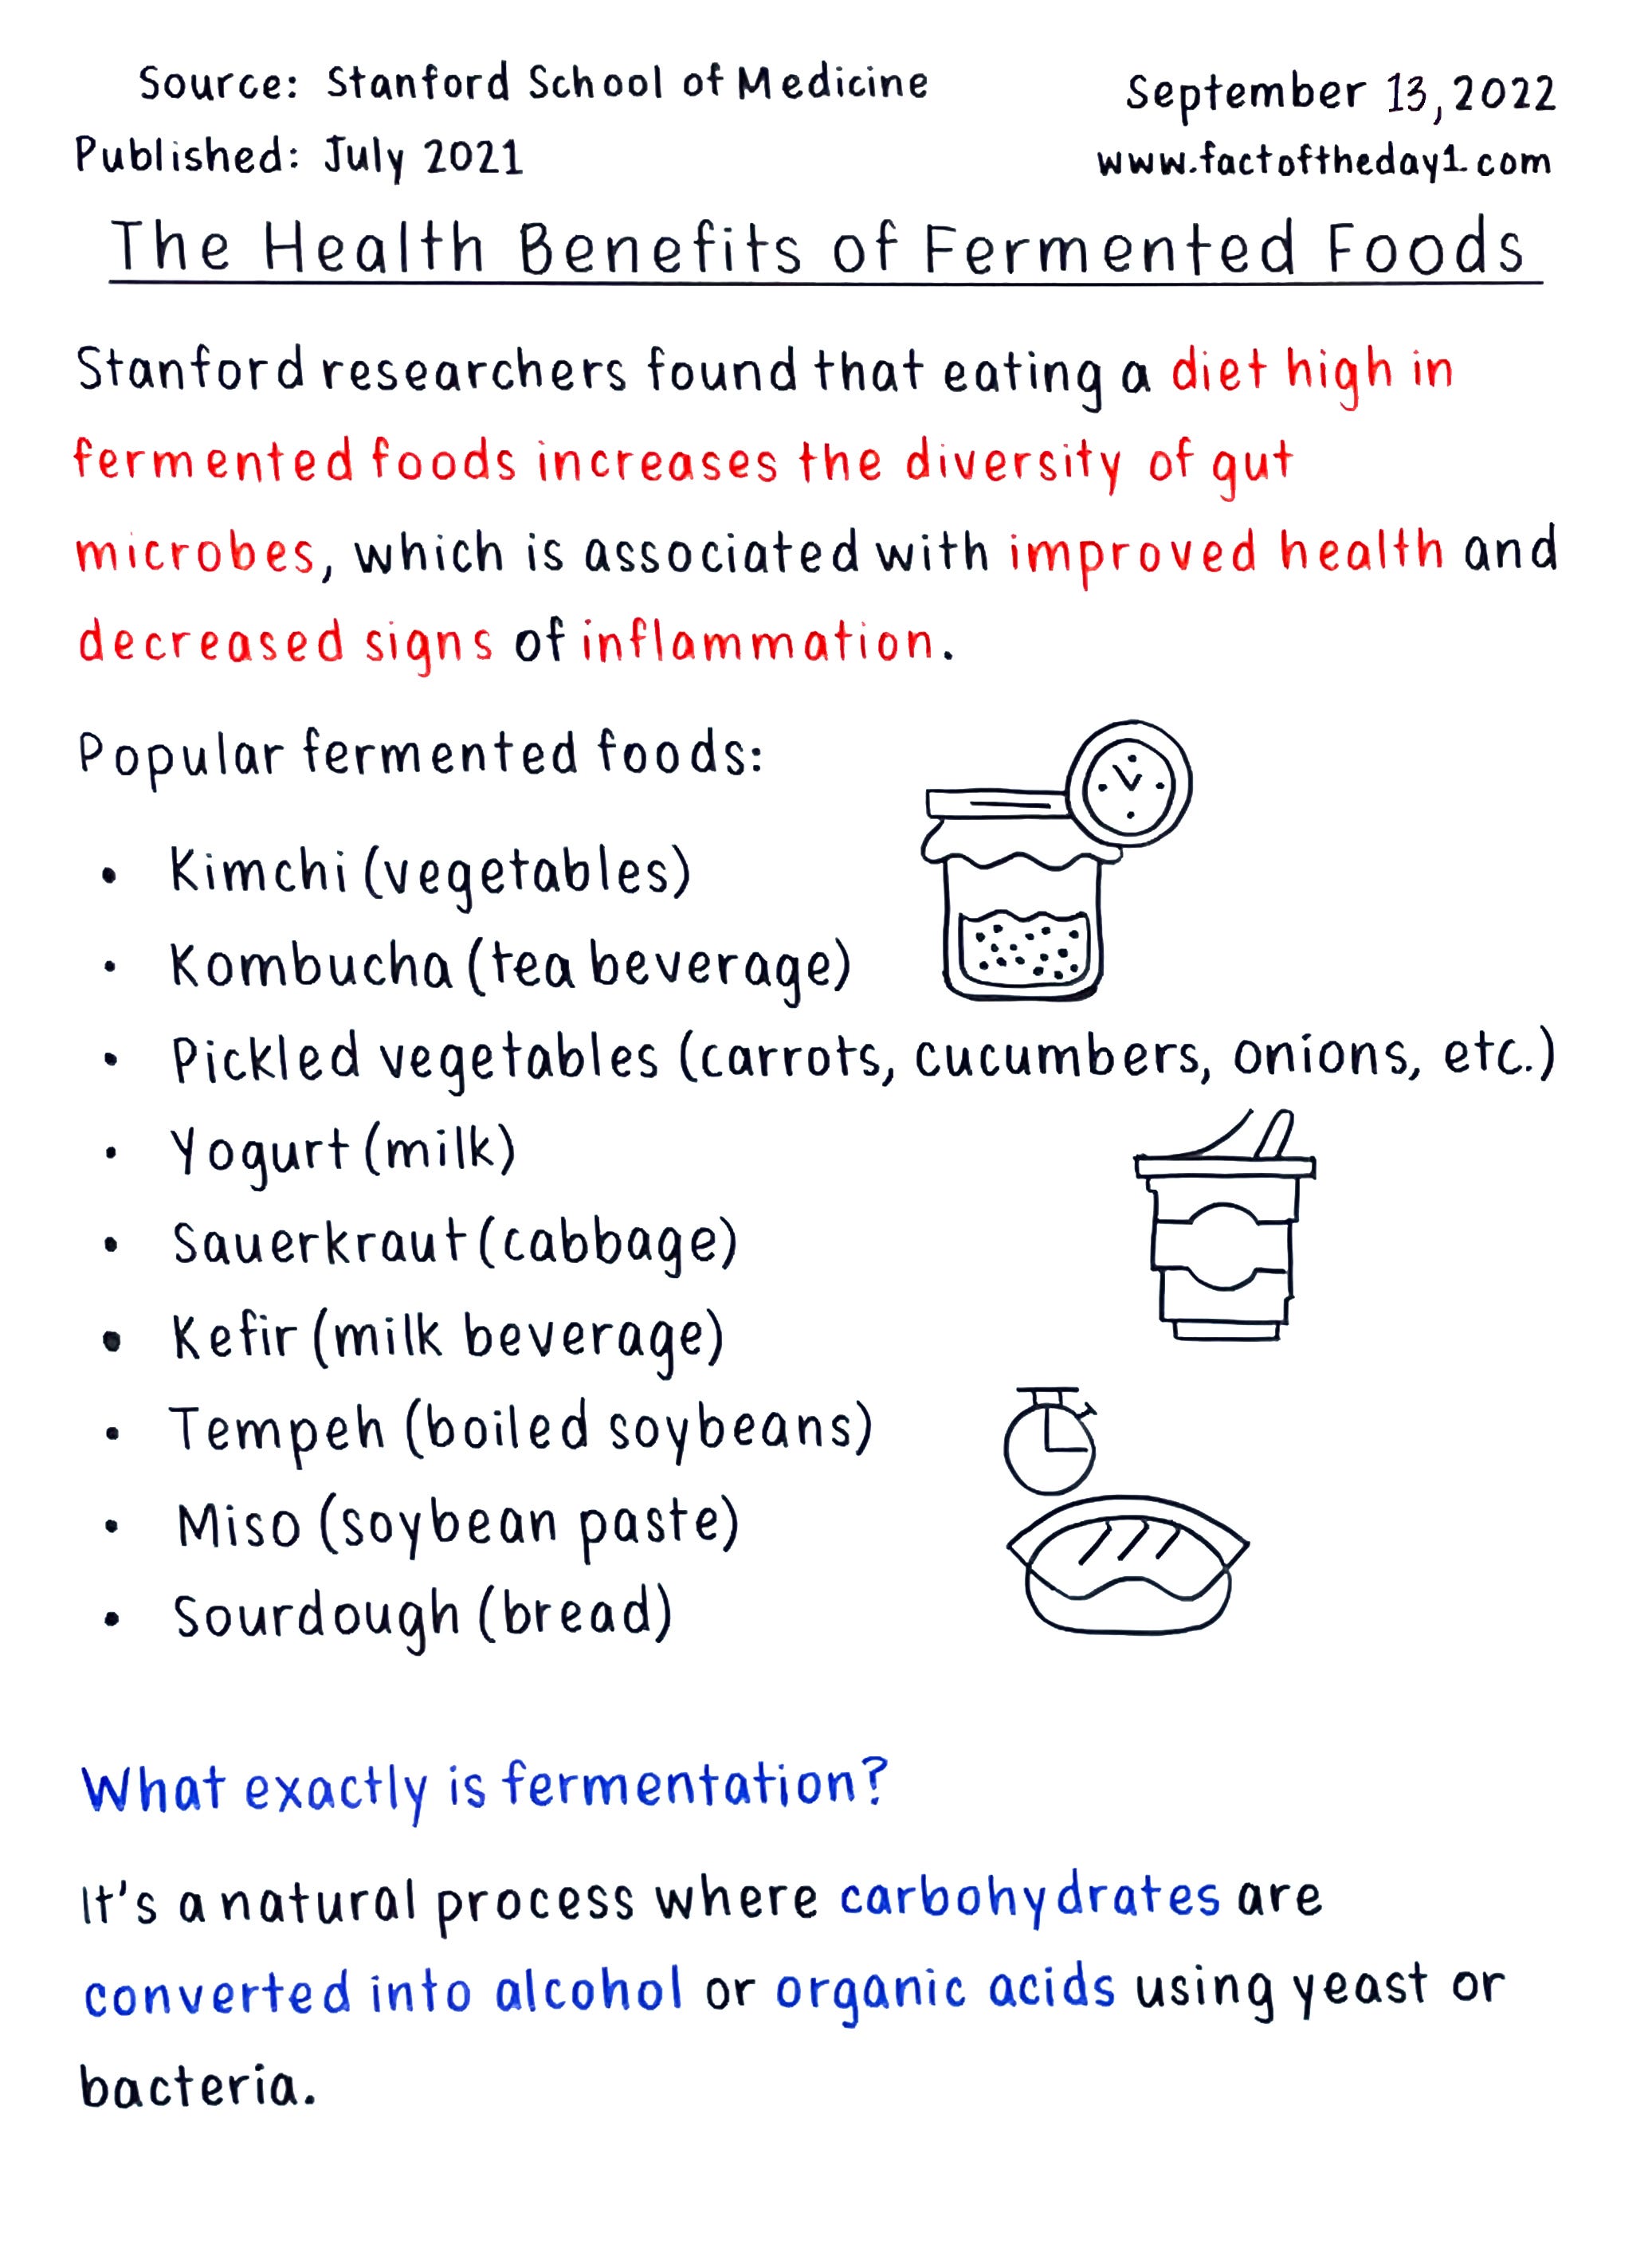 III. Health Benefits of Fermented Foods